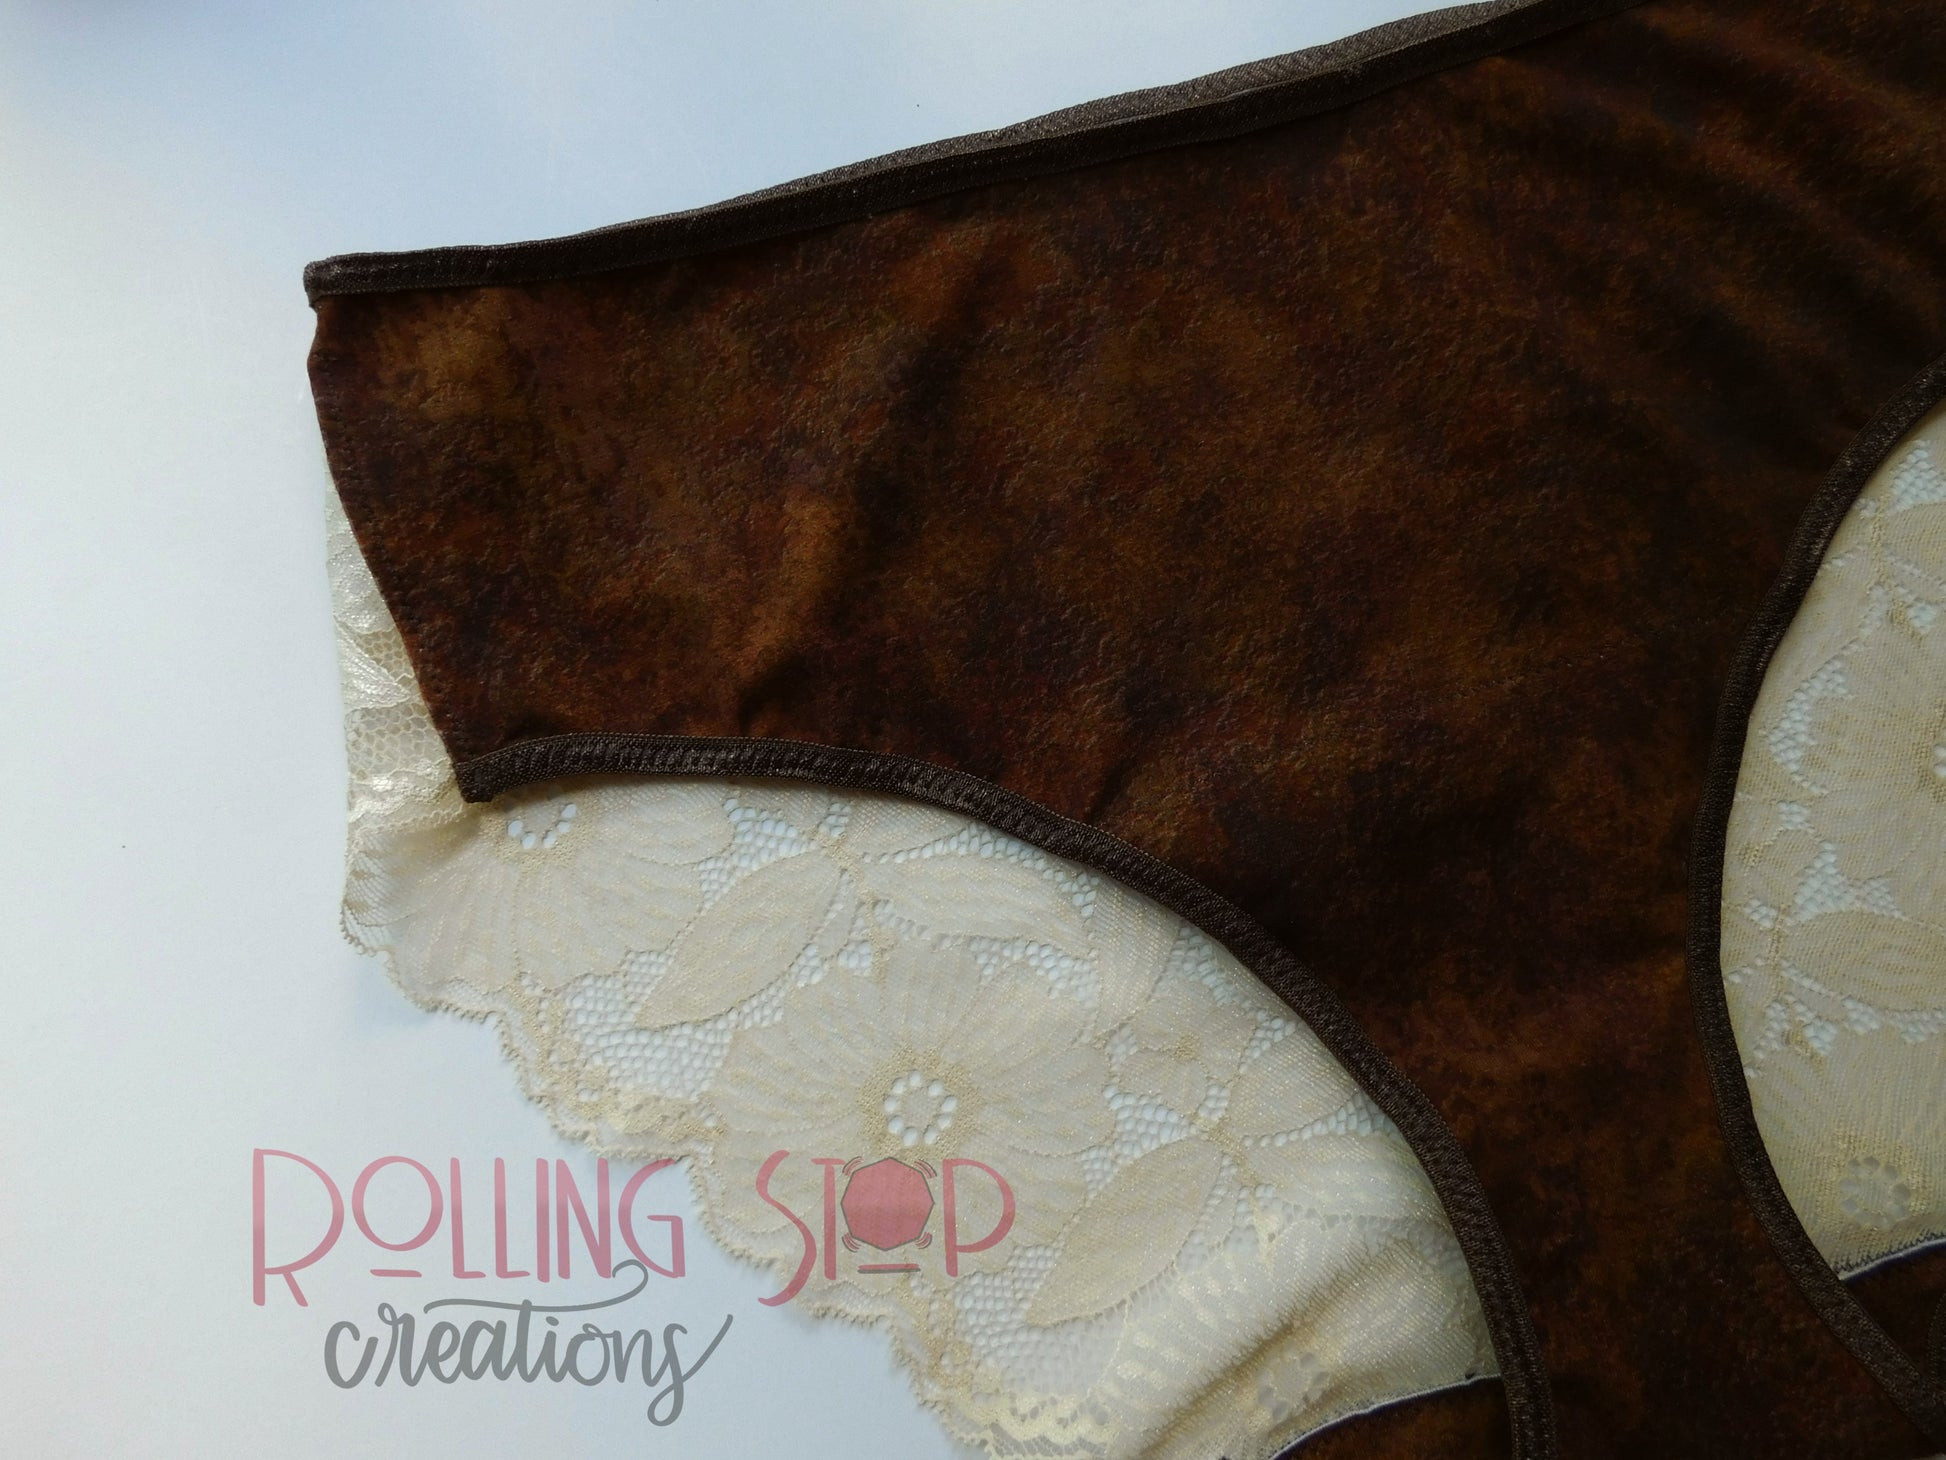 Ocean Galaxy Lace Back Pantydrawls by Rolling Stop Creations sold by Rolling Stop Creations Lace - Lingerie - Panties